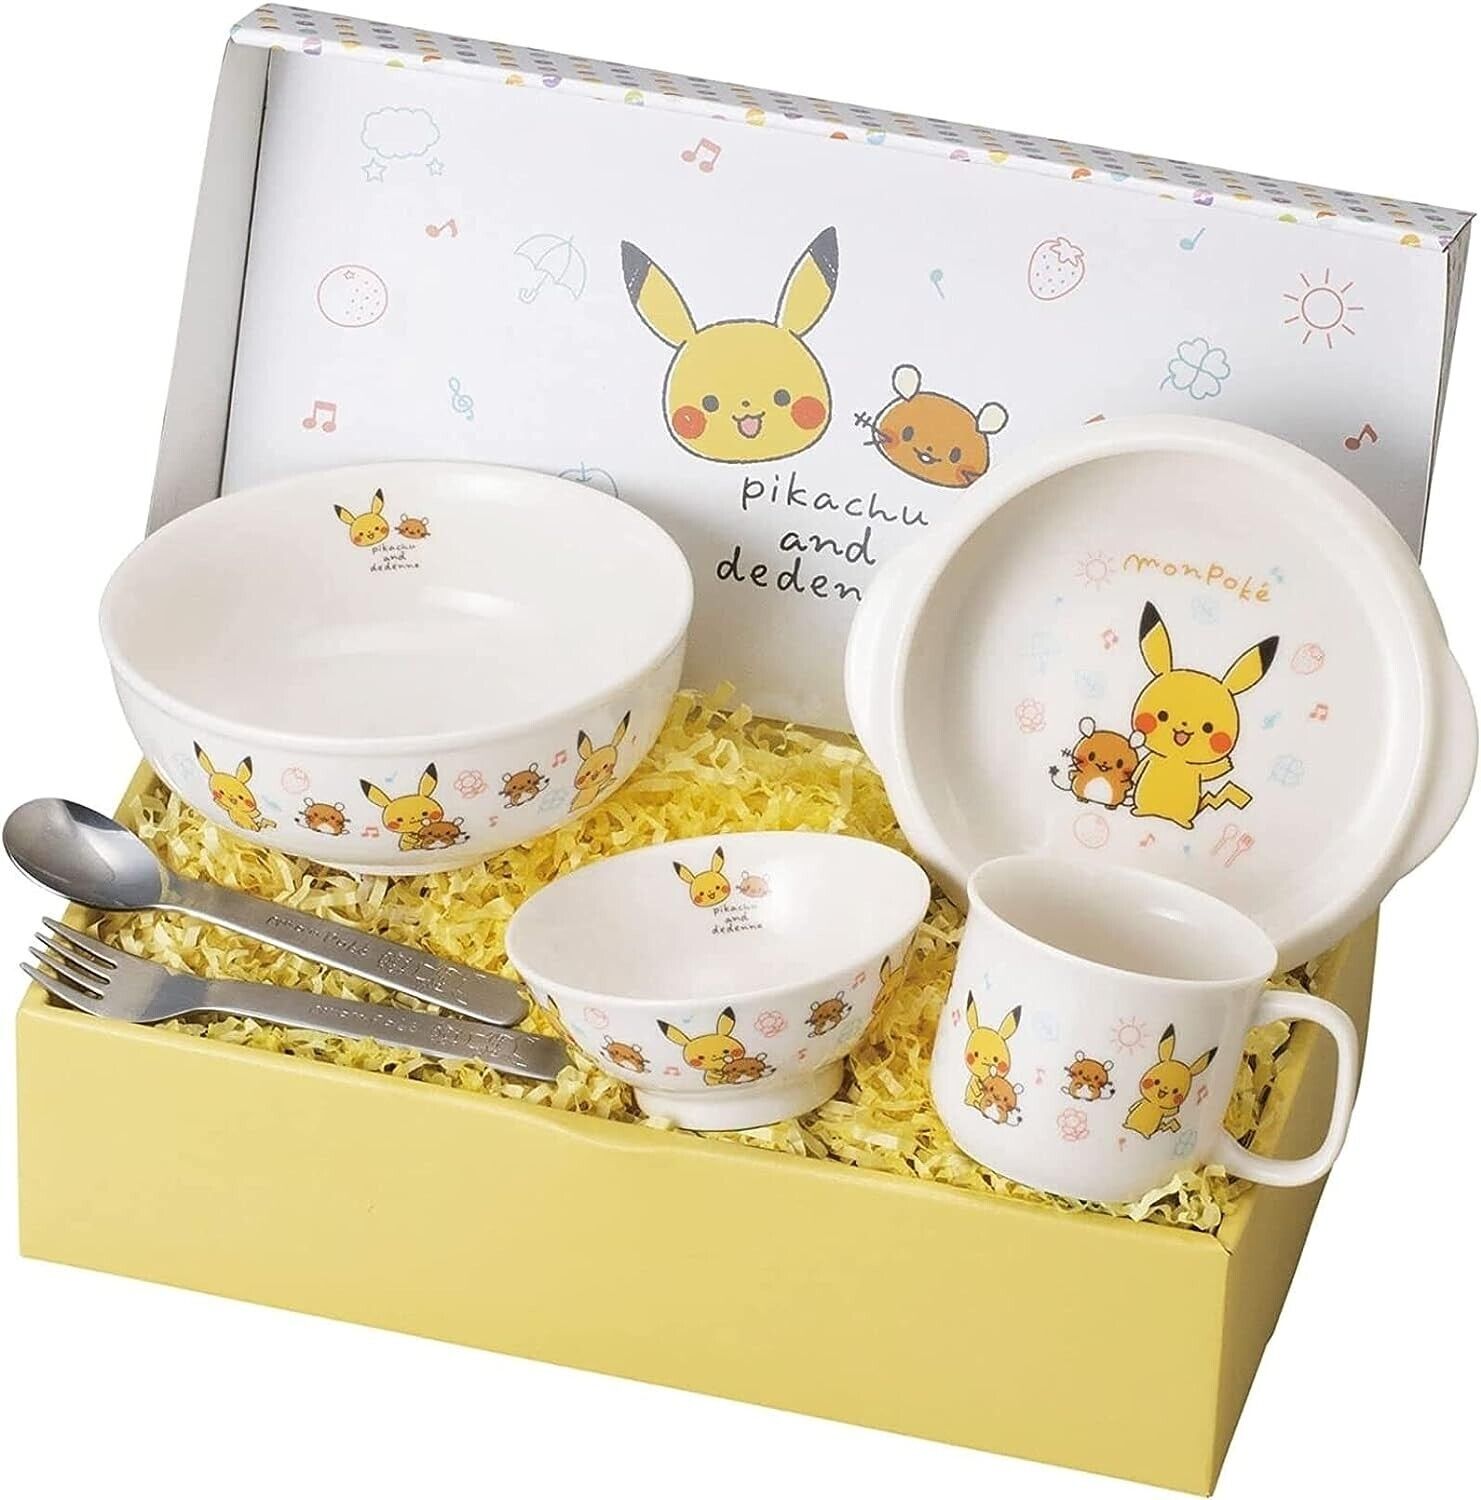 Pokemon Monpoke Baby & Kids Tableware Gift Set Made in Japan Pikachu Dedenne